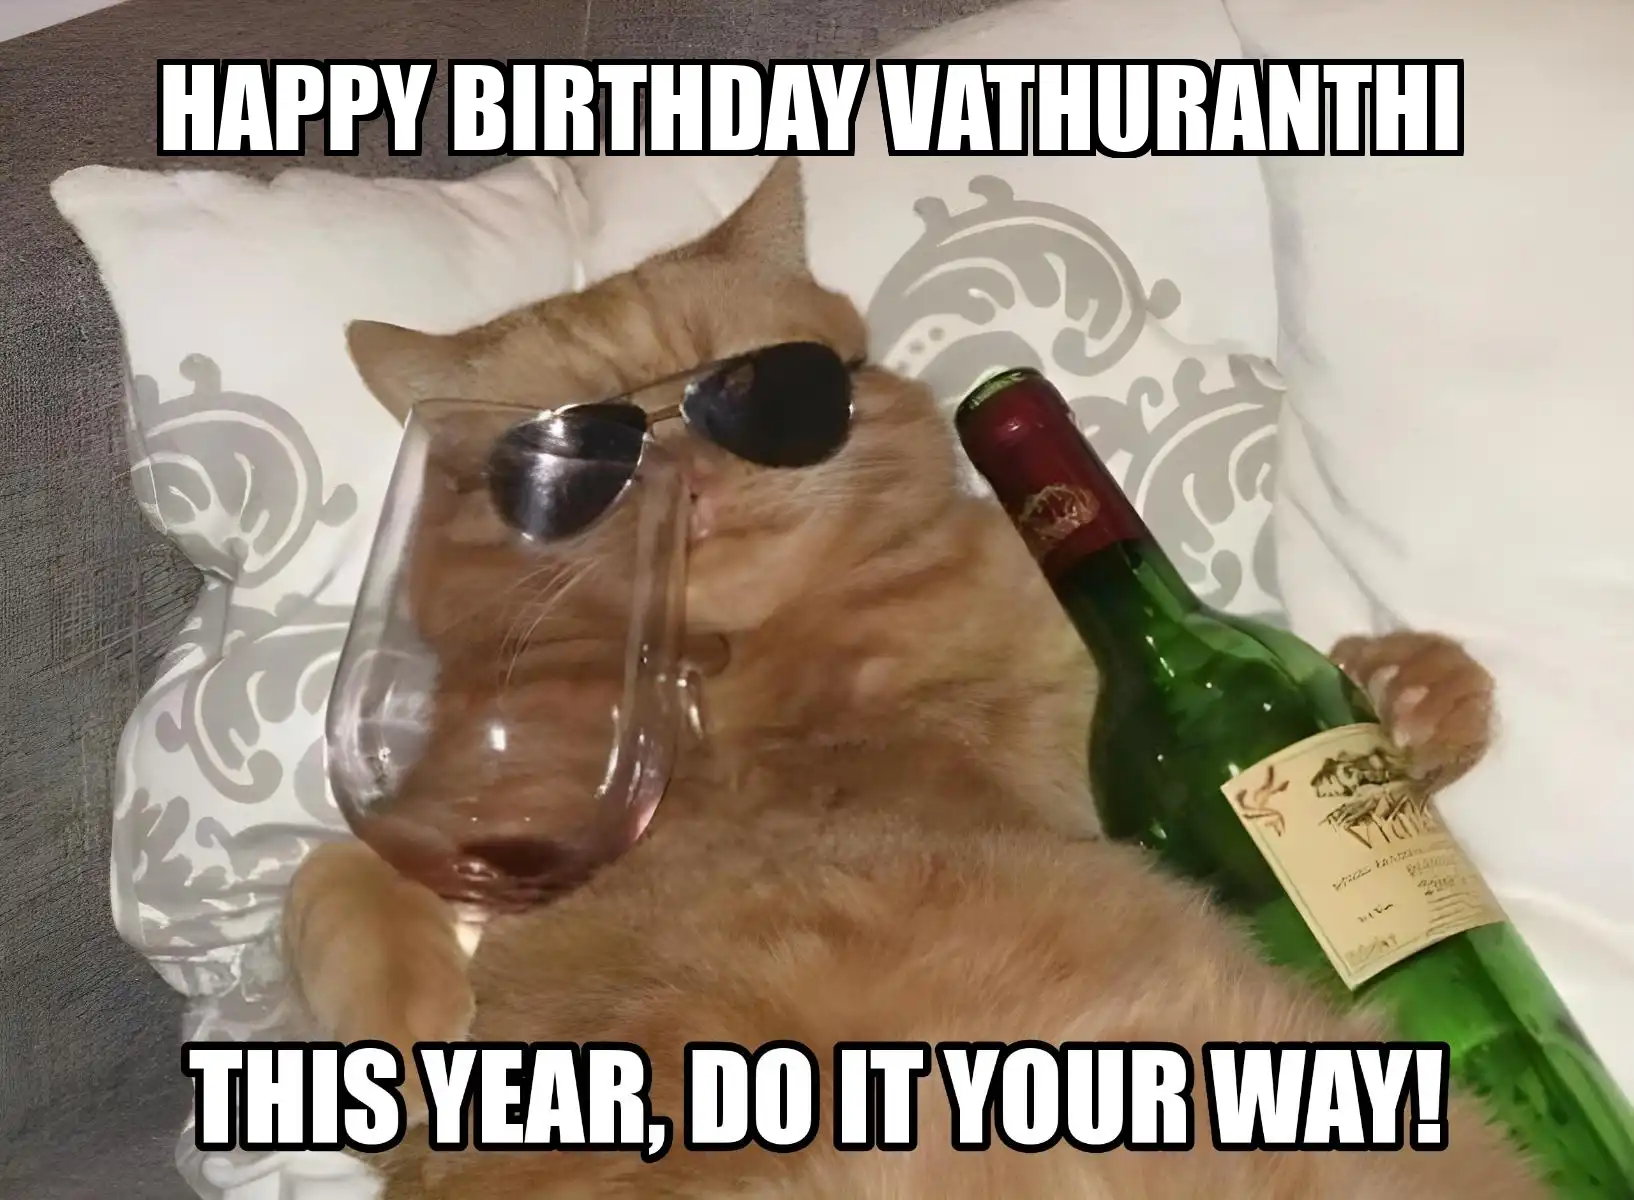 Happy Birthday Vathuranthi This Year Do It Your Way Meme